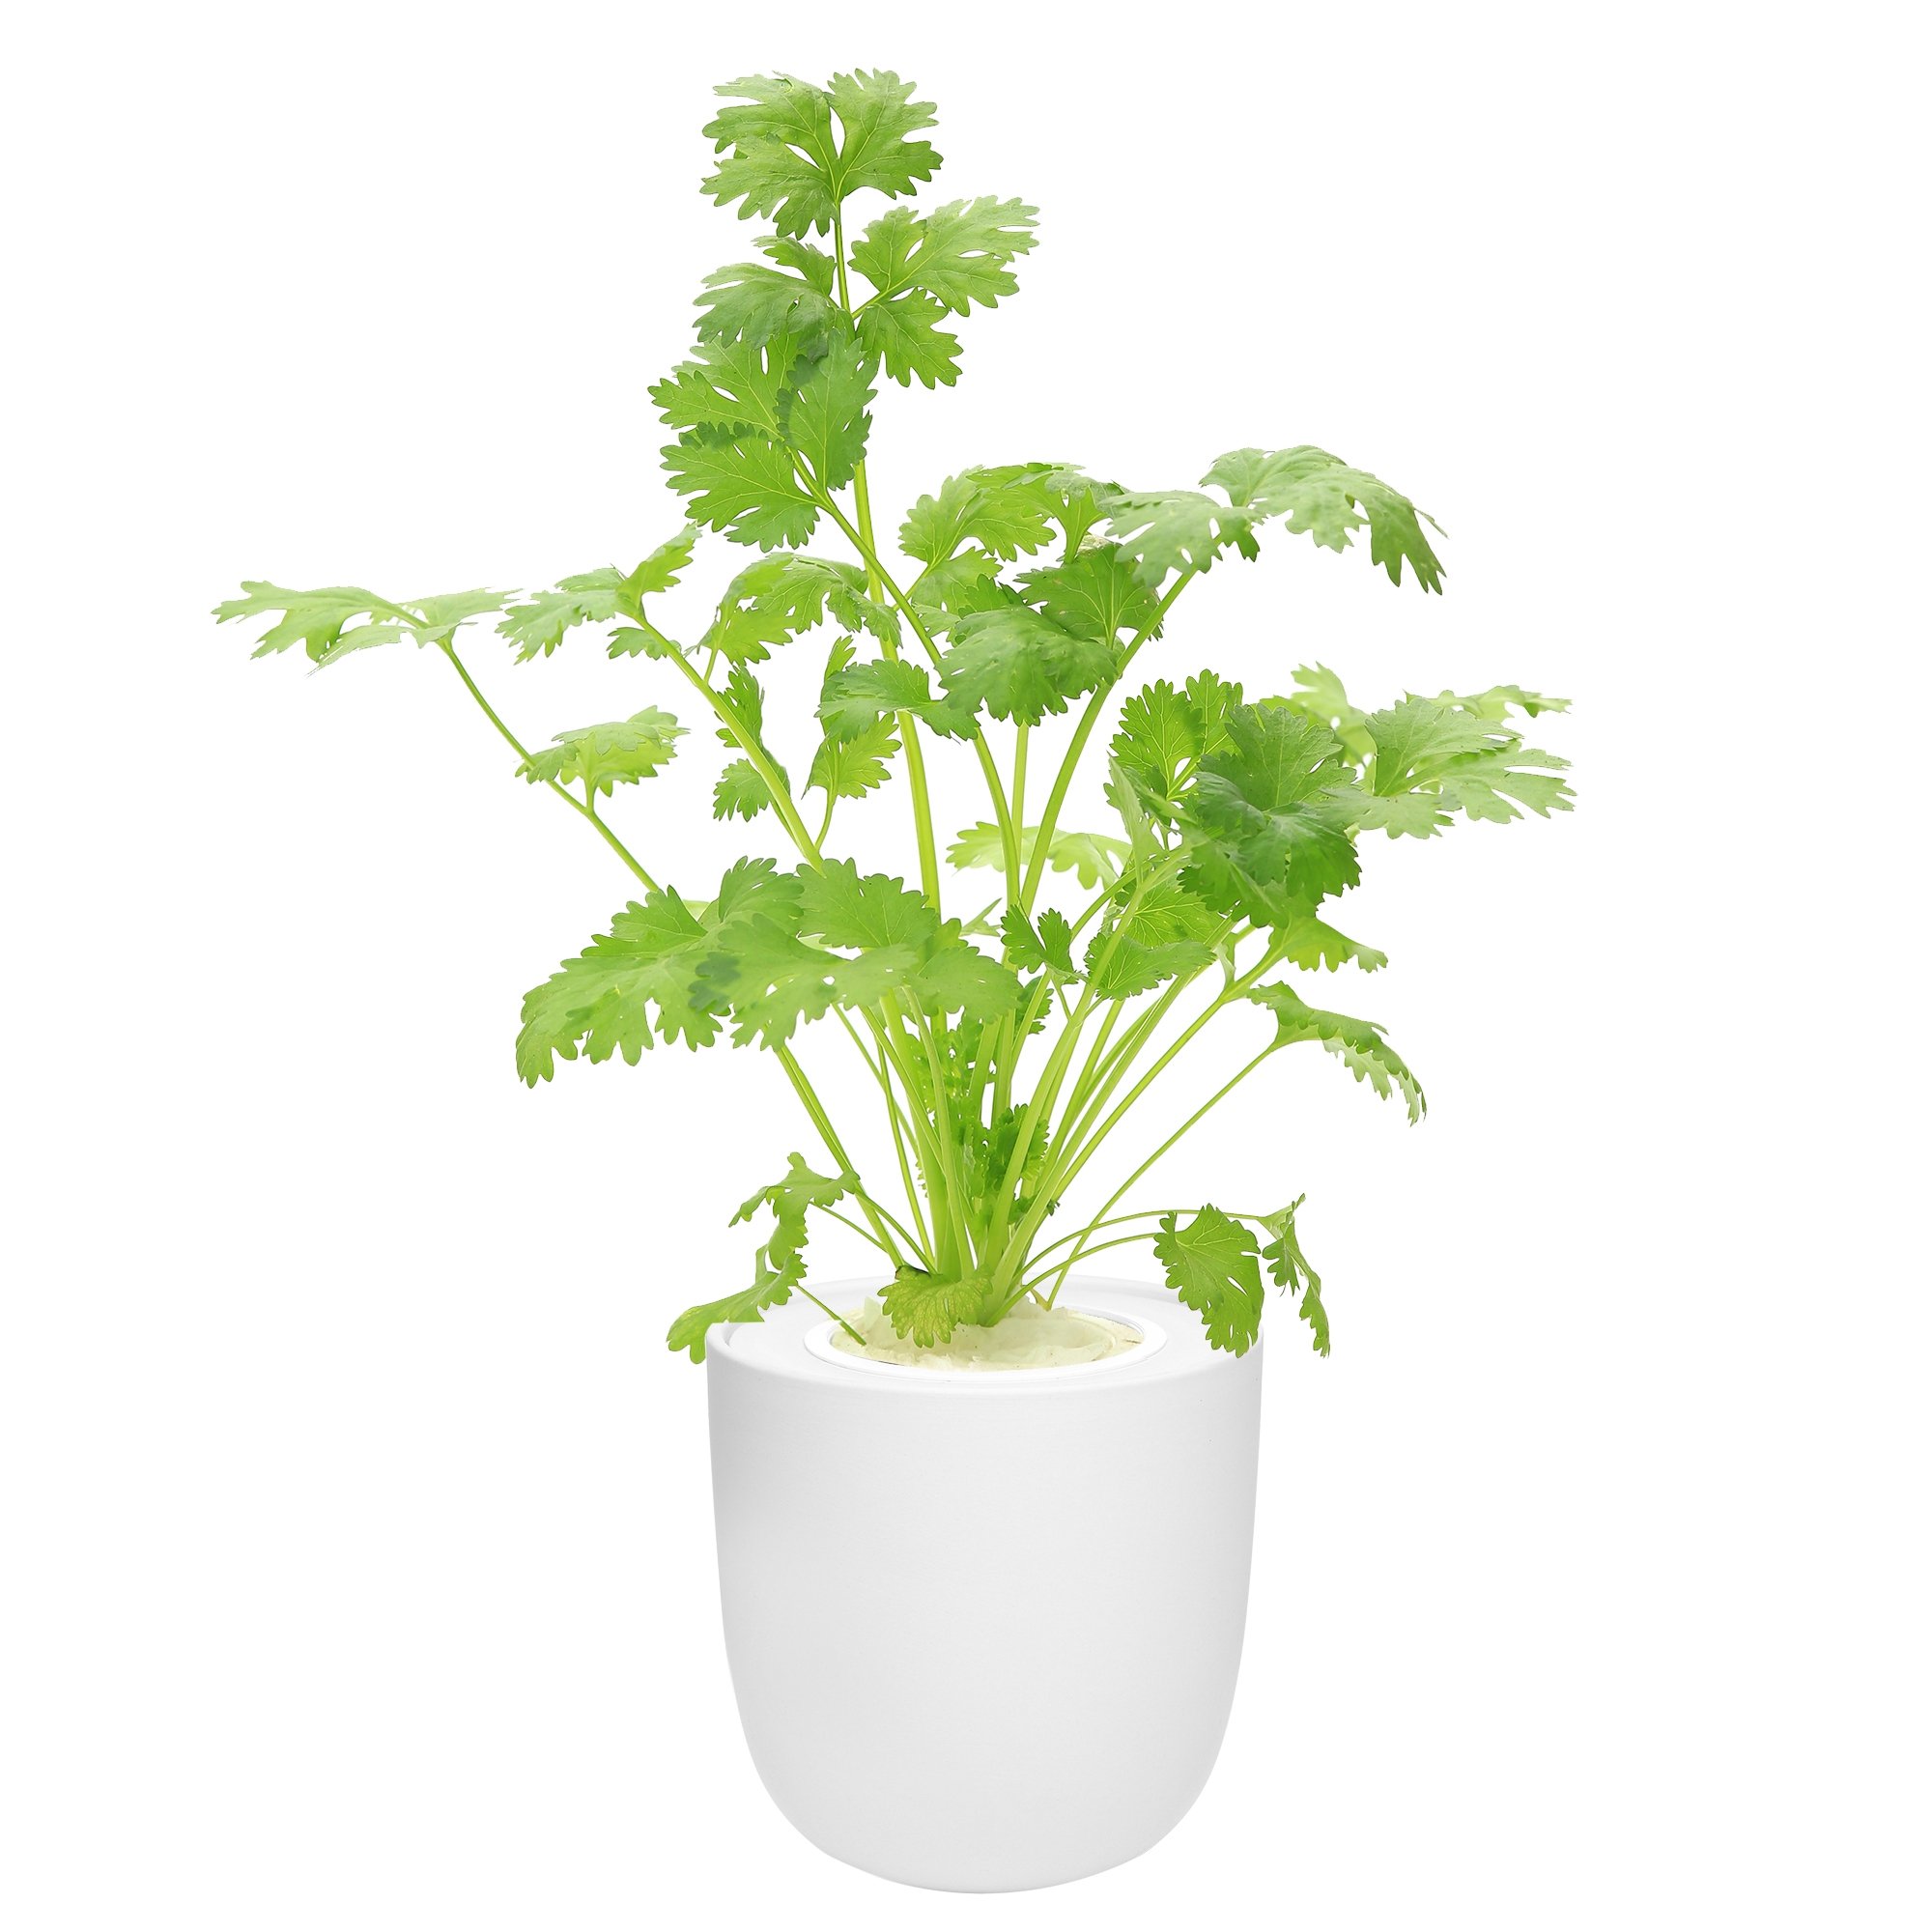 Cilantro White Ceramic Pot Hydroponic Growing Kit with Organic Seeds